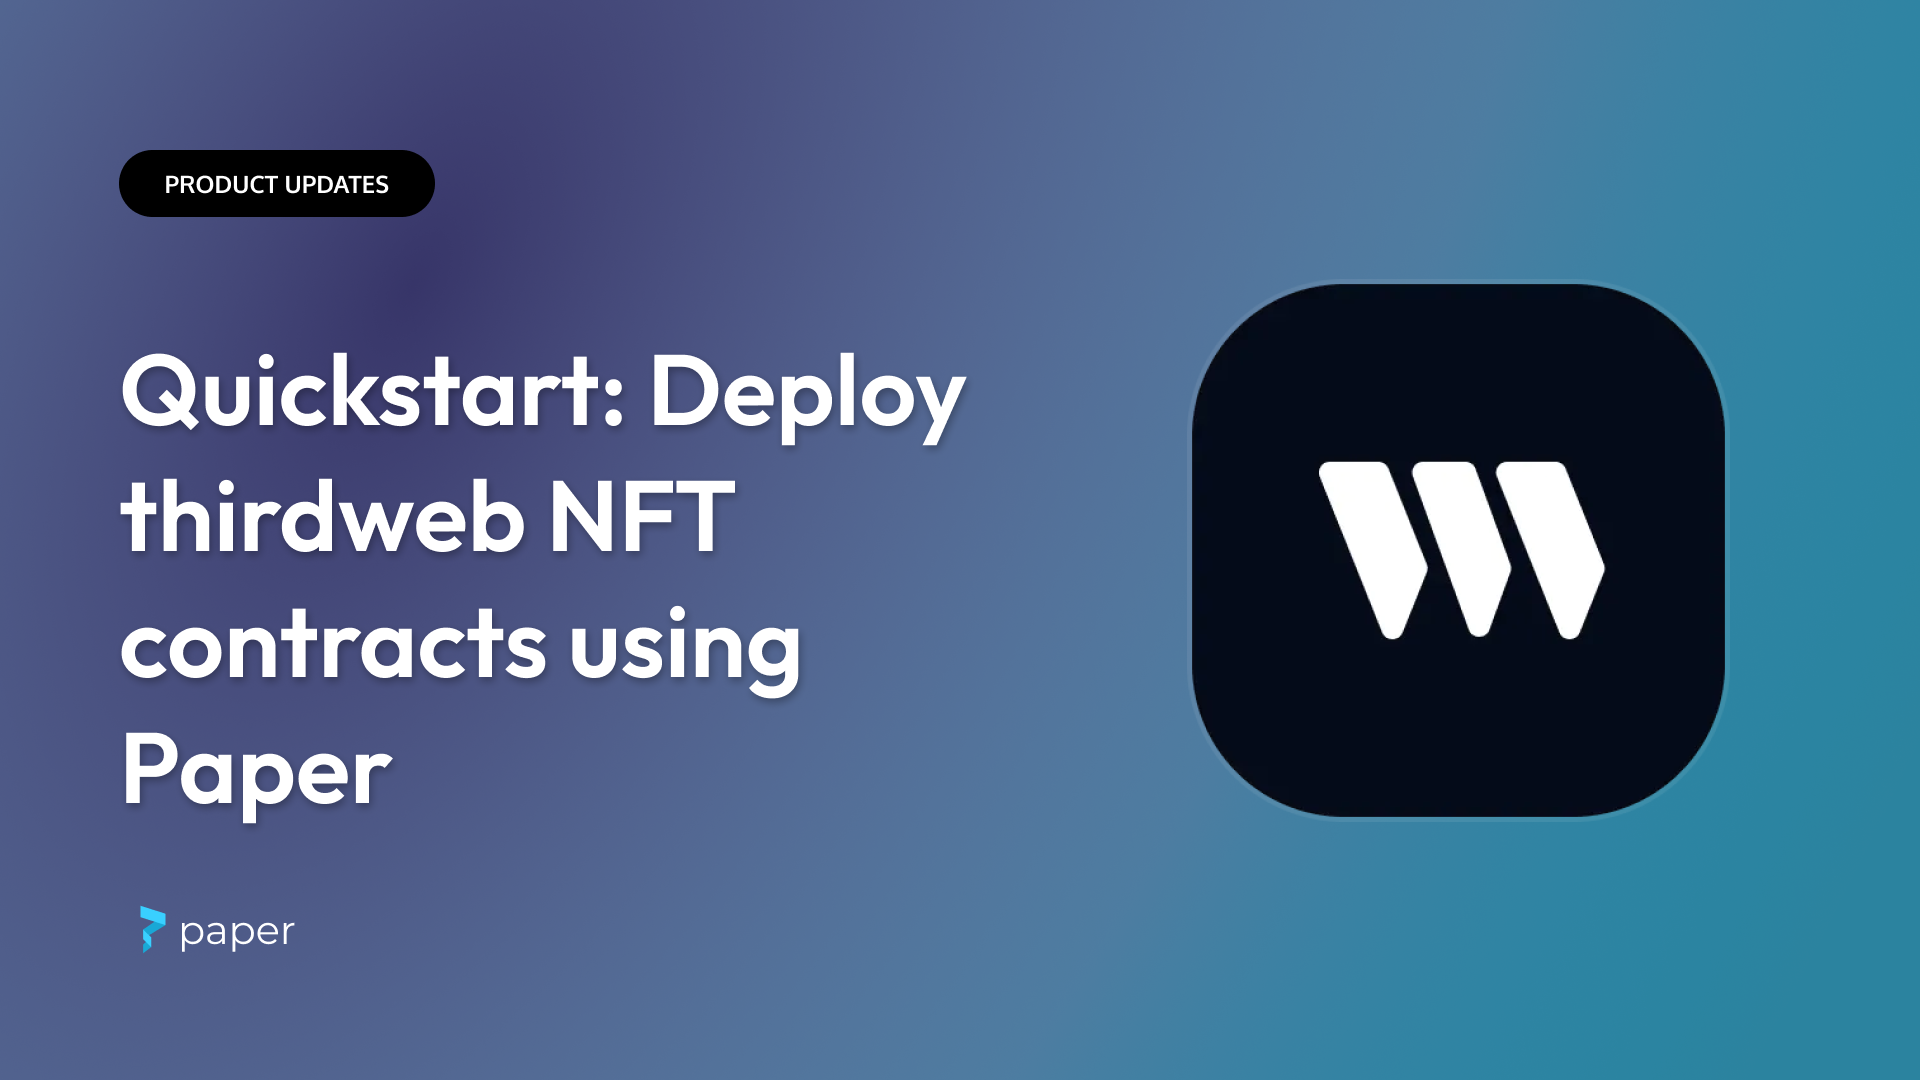 Announcing Quickstart: Deploy thirdweb NFT contracts using Paper